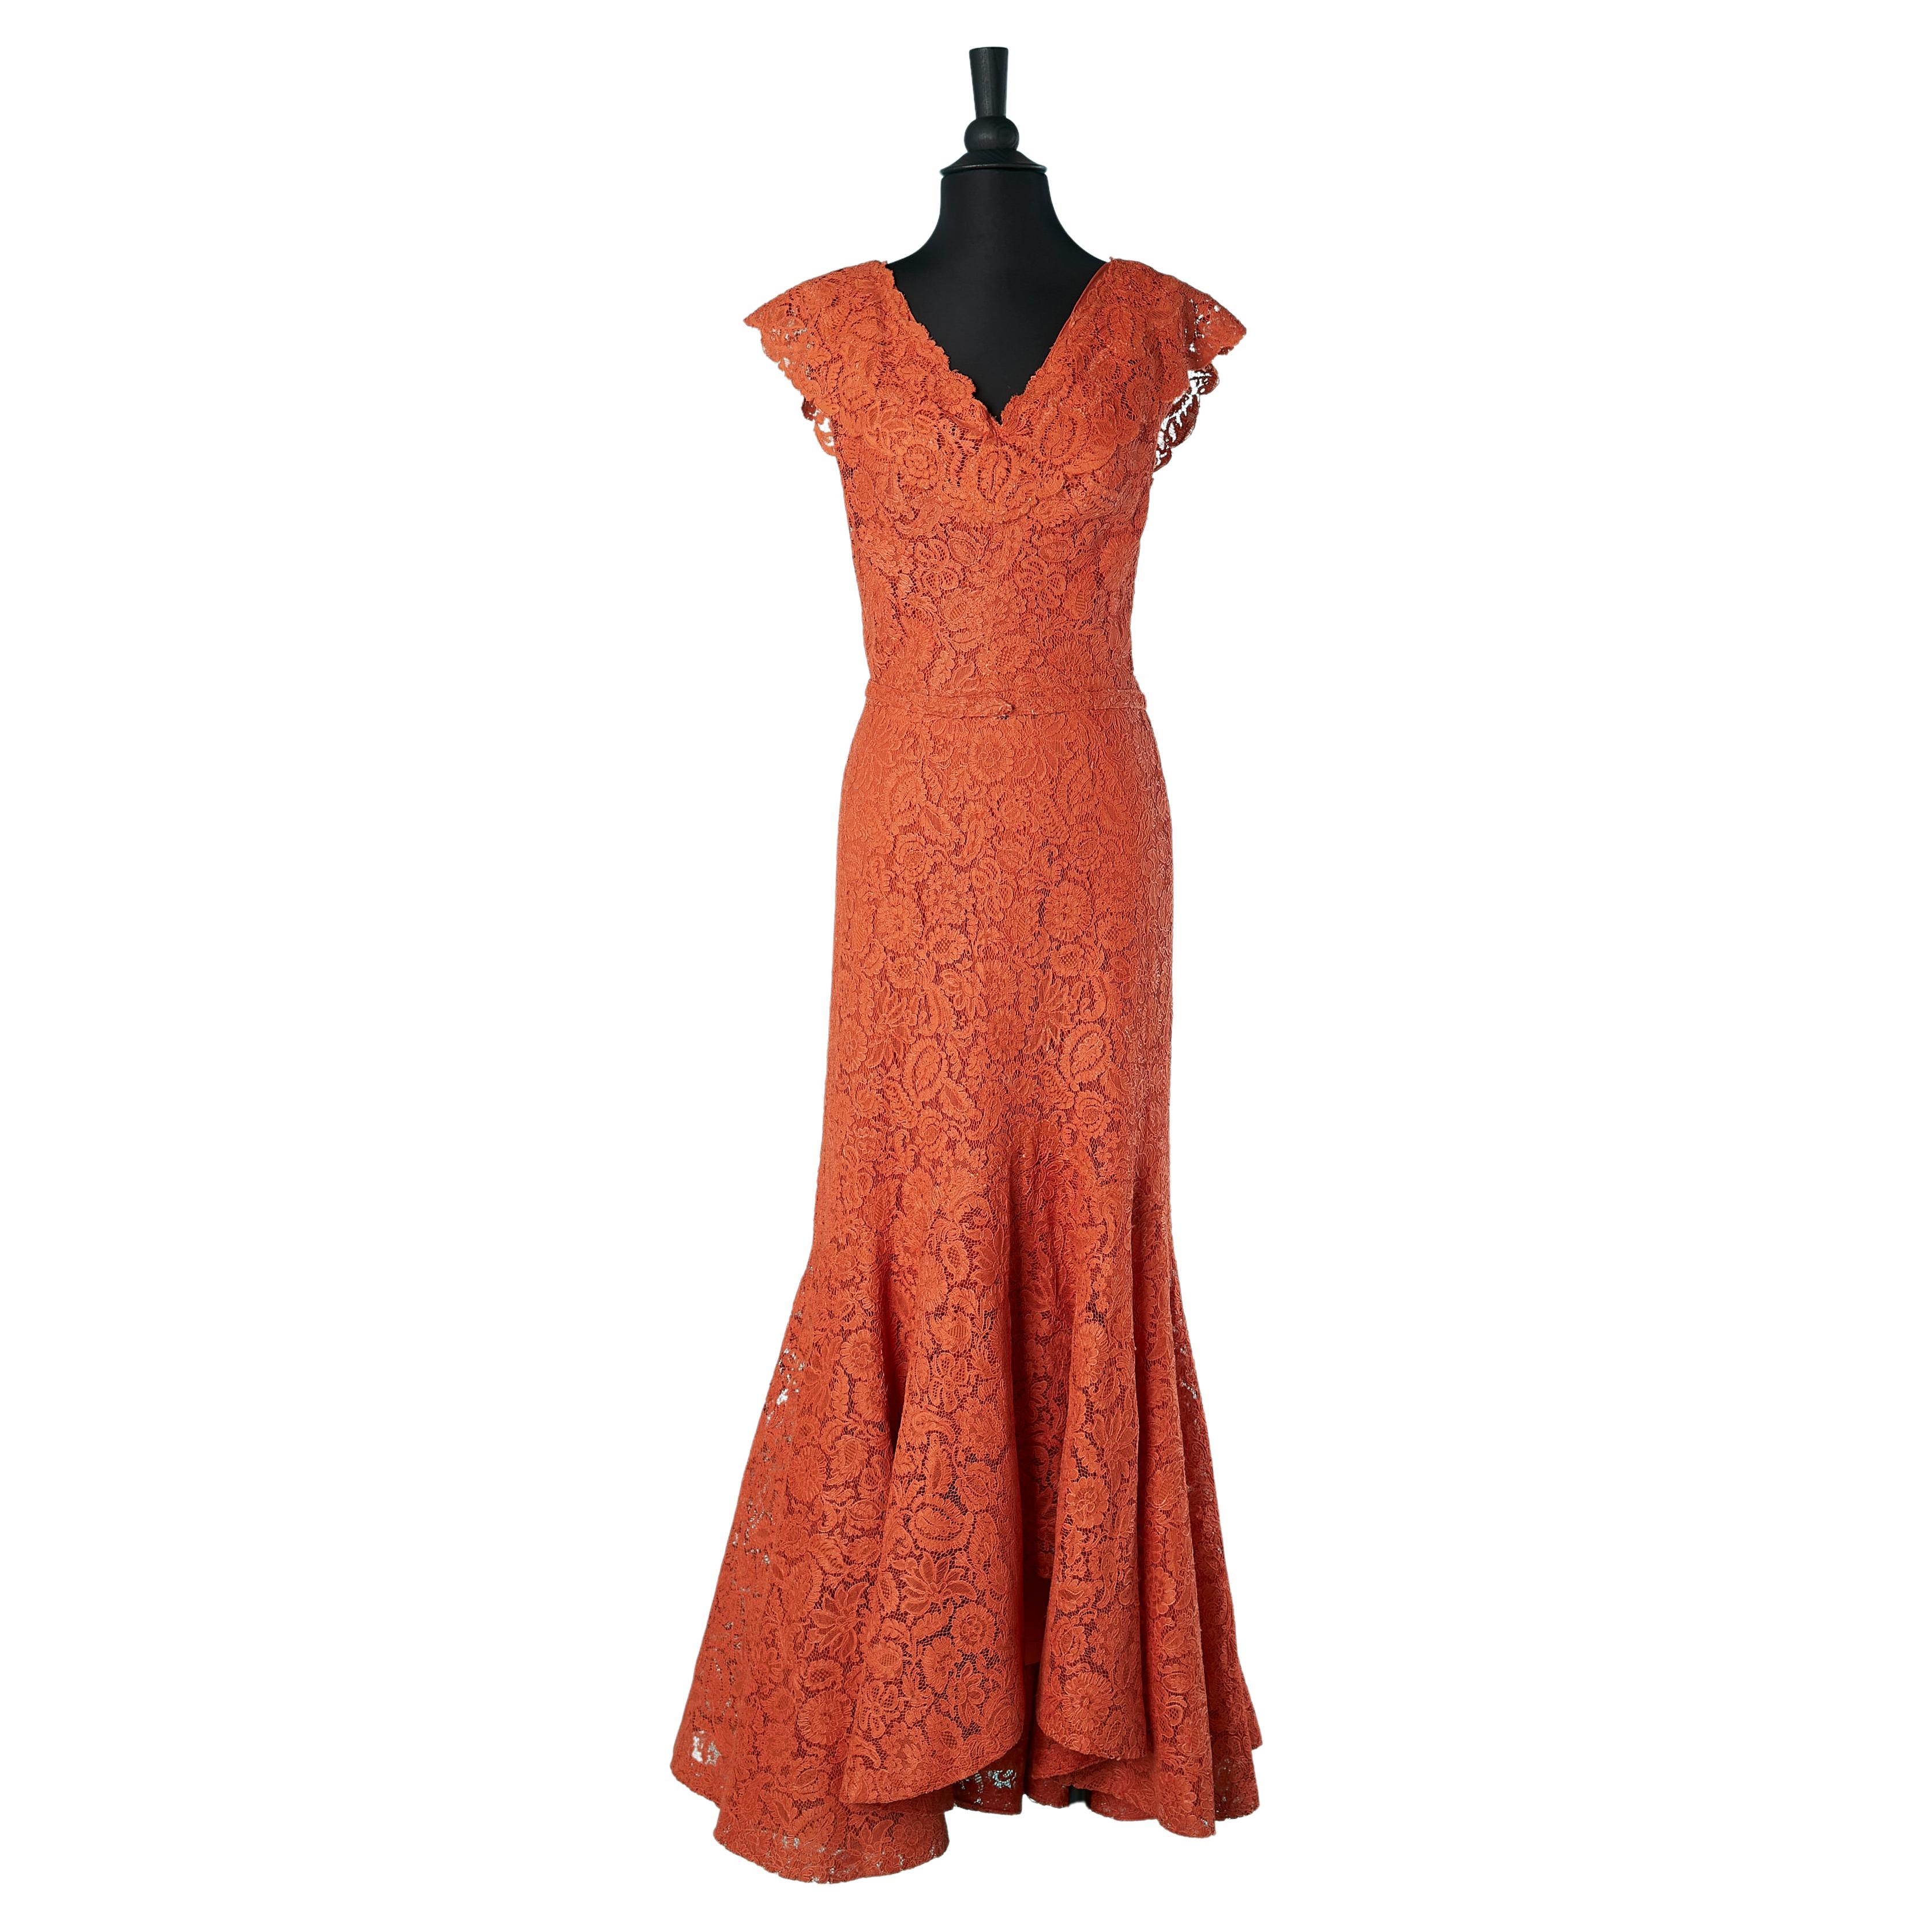 Orange lace evening dress mermaid gown Ballet INC Circa 1950's  For Sale